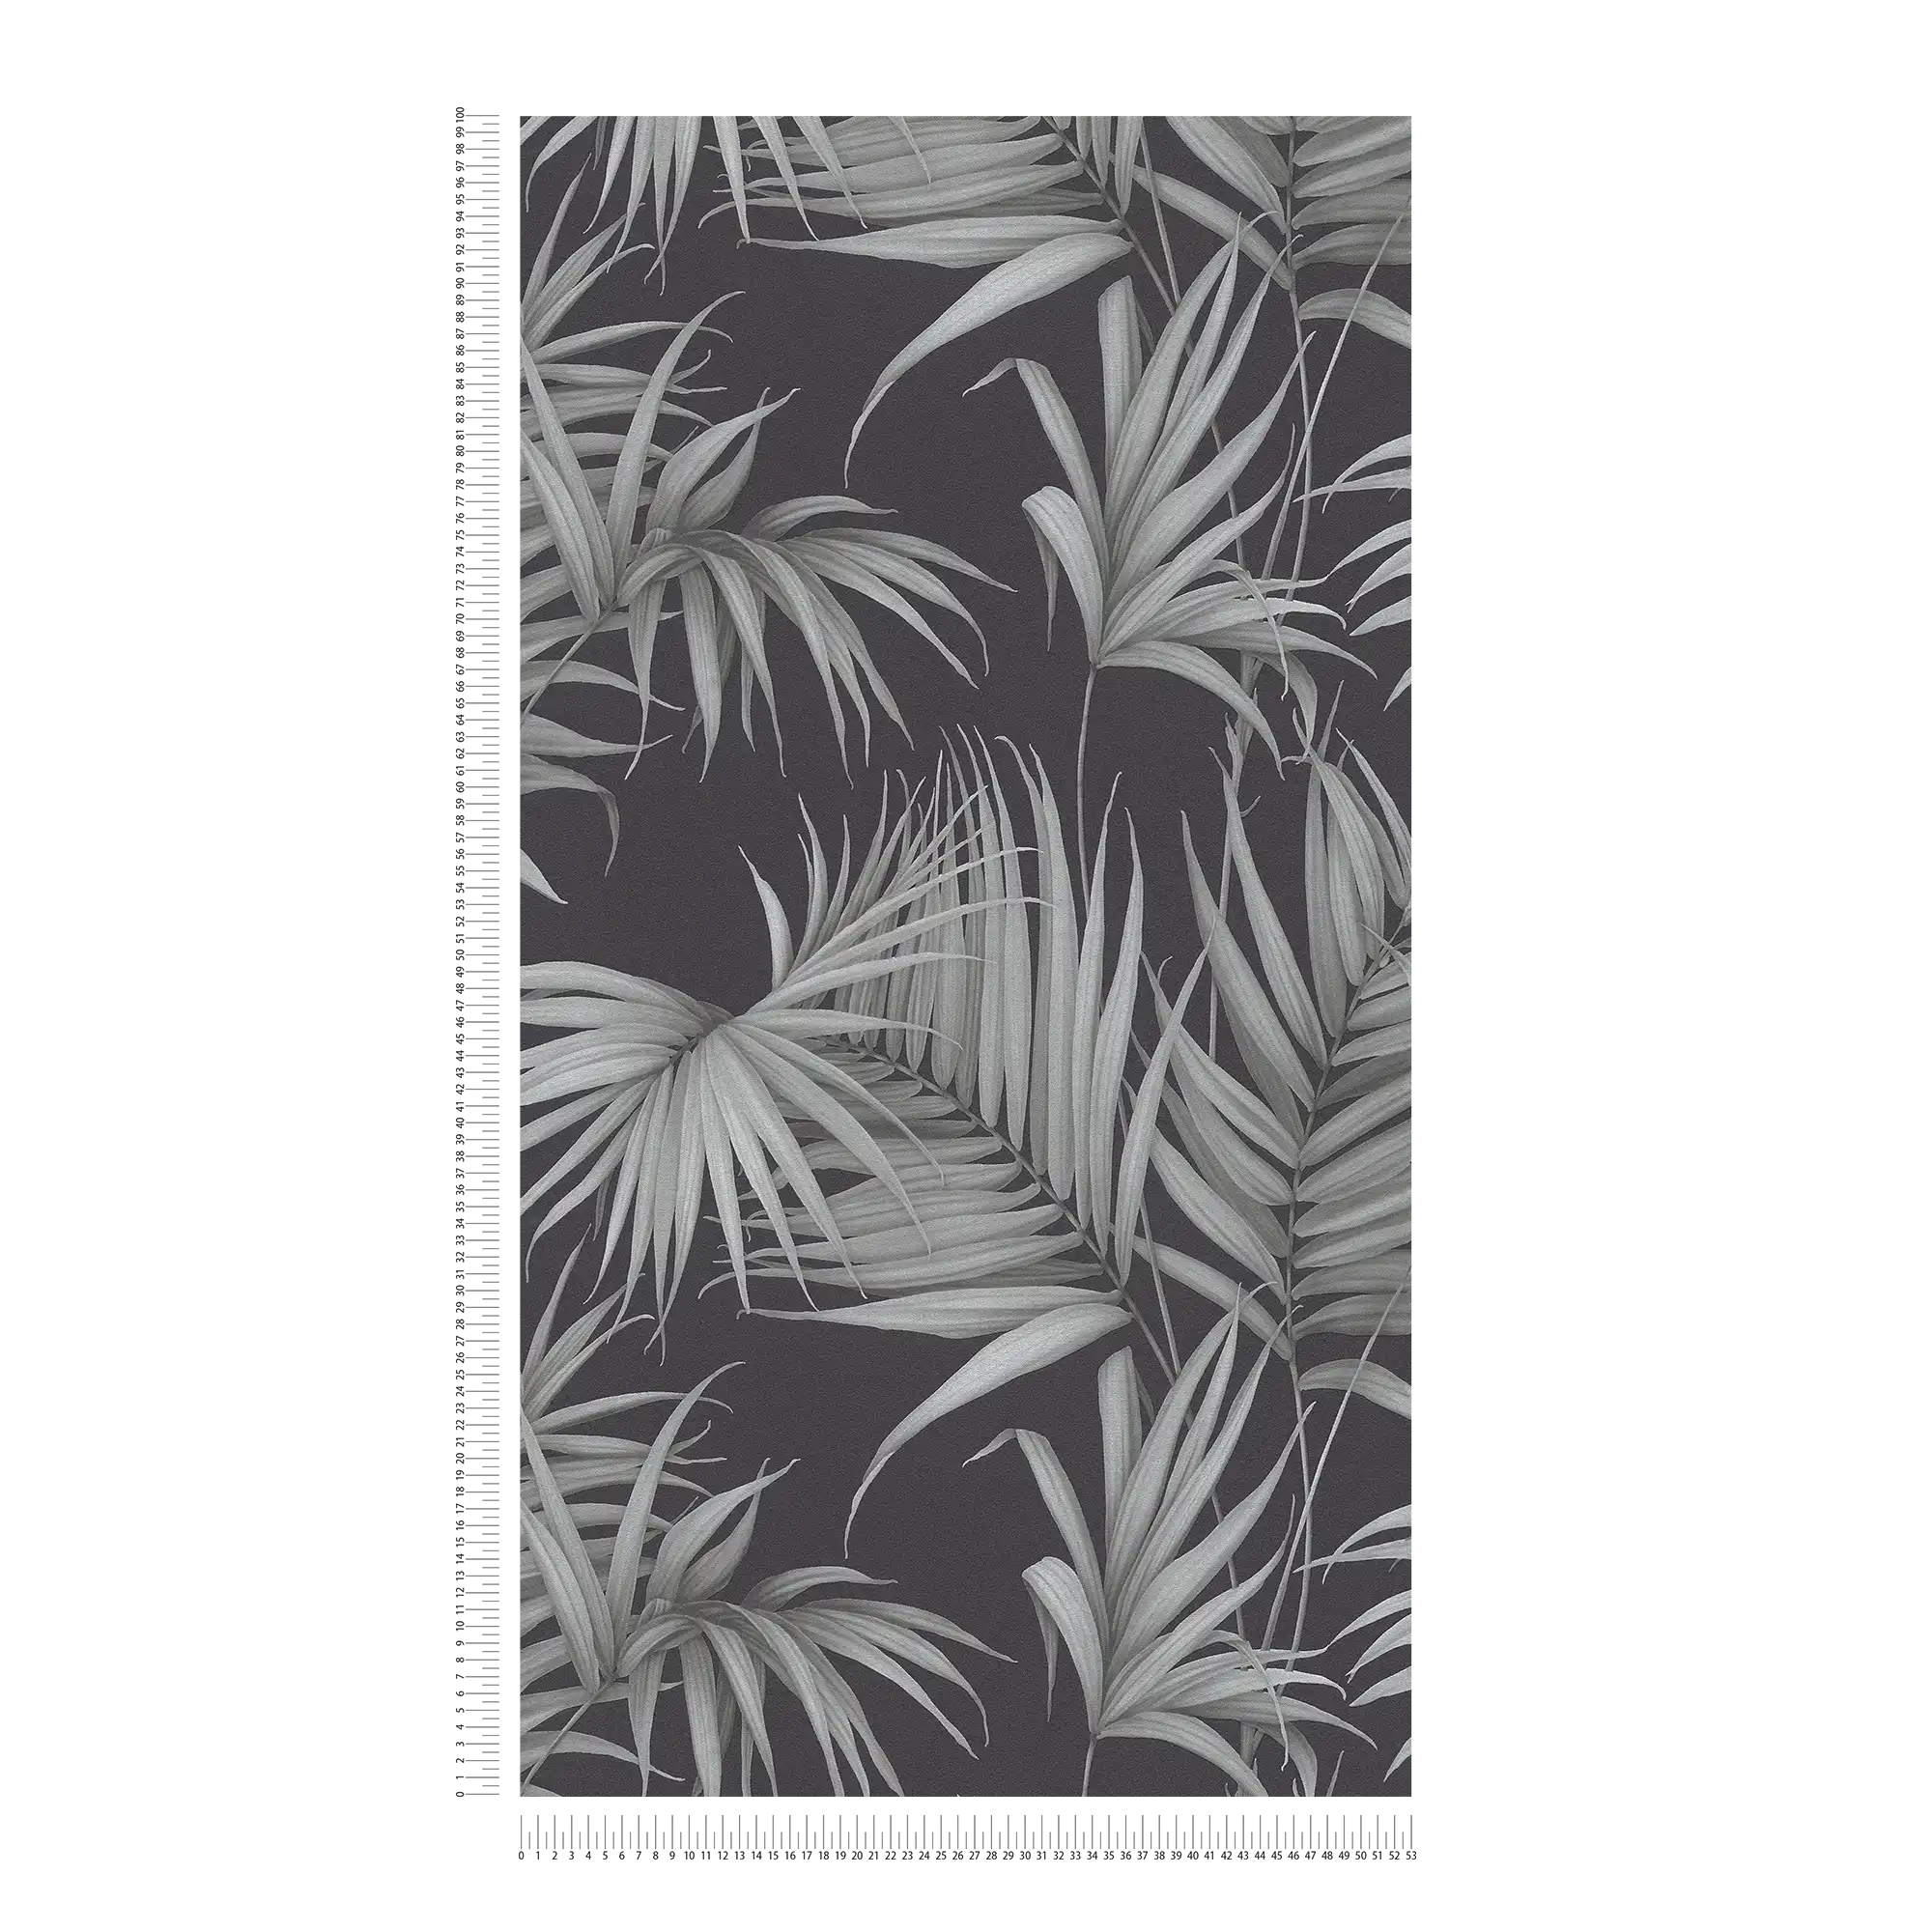             Papel pintado tropical con hojas de helecho - gris, negro
        